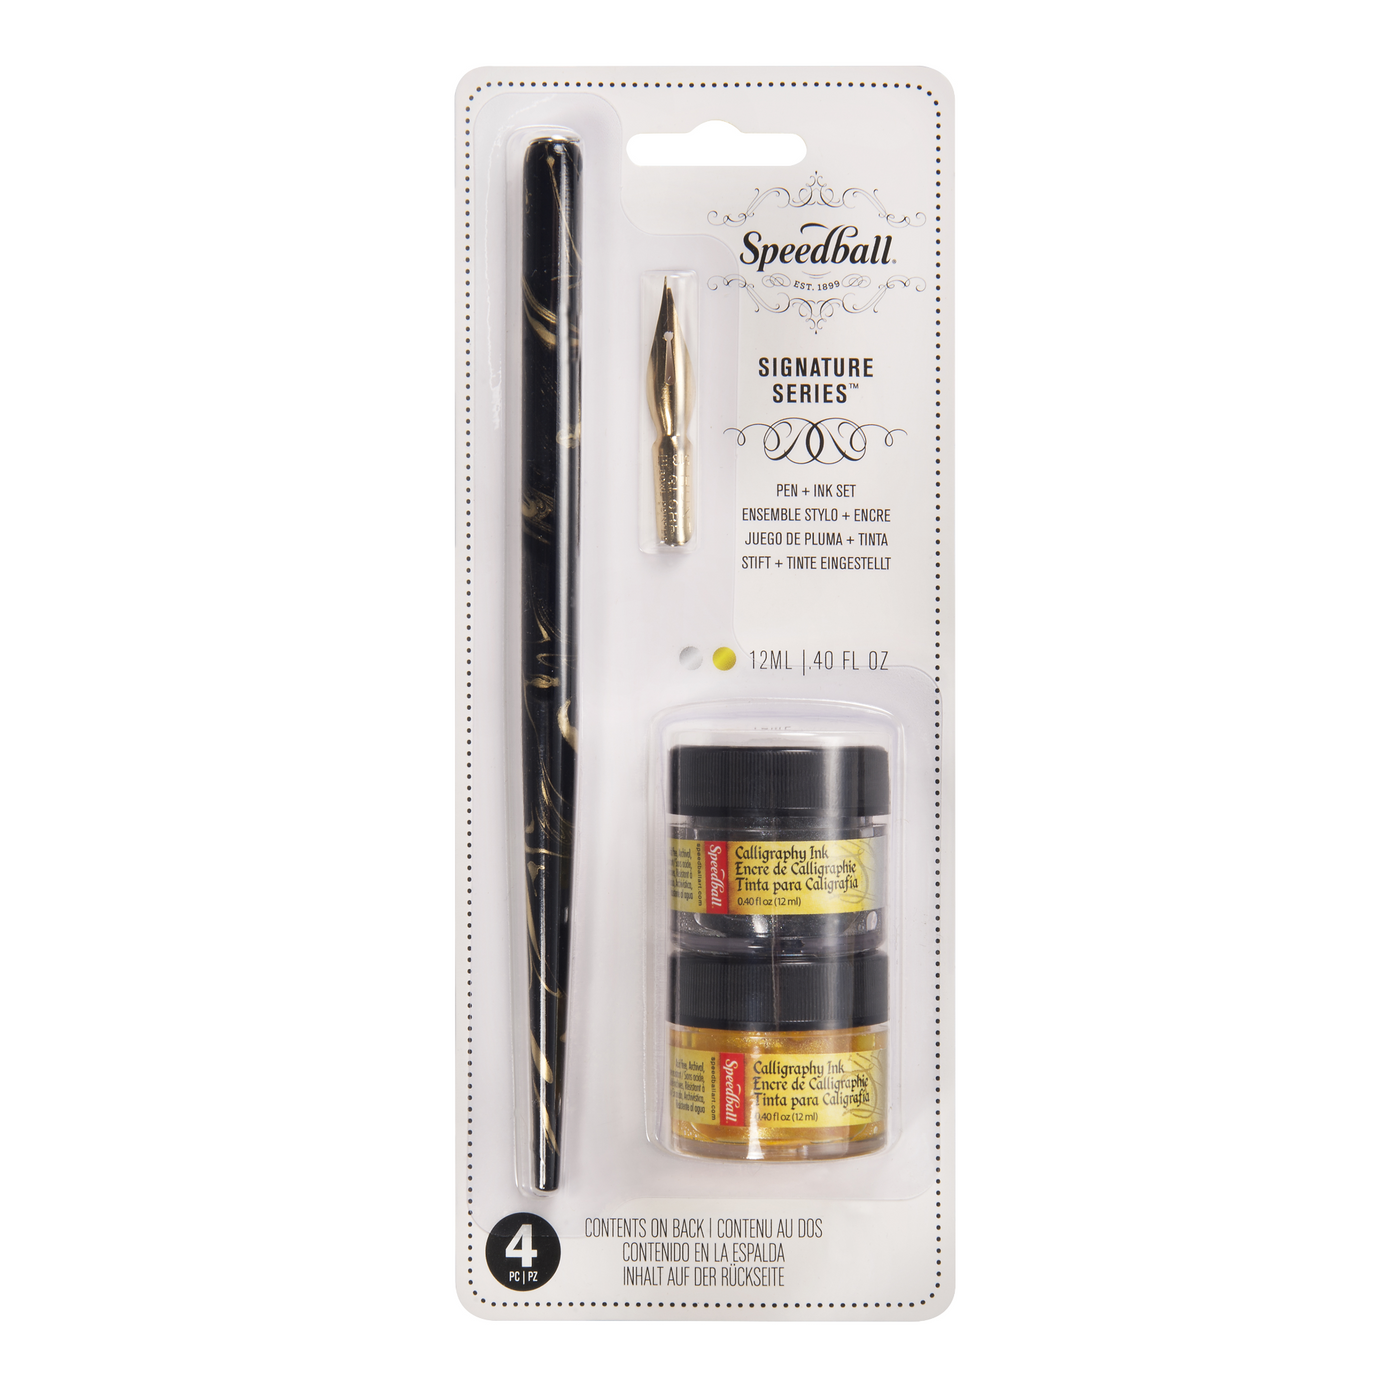 Speedball Signature Series Pen & Ink Set - Silver & Gold